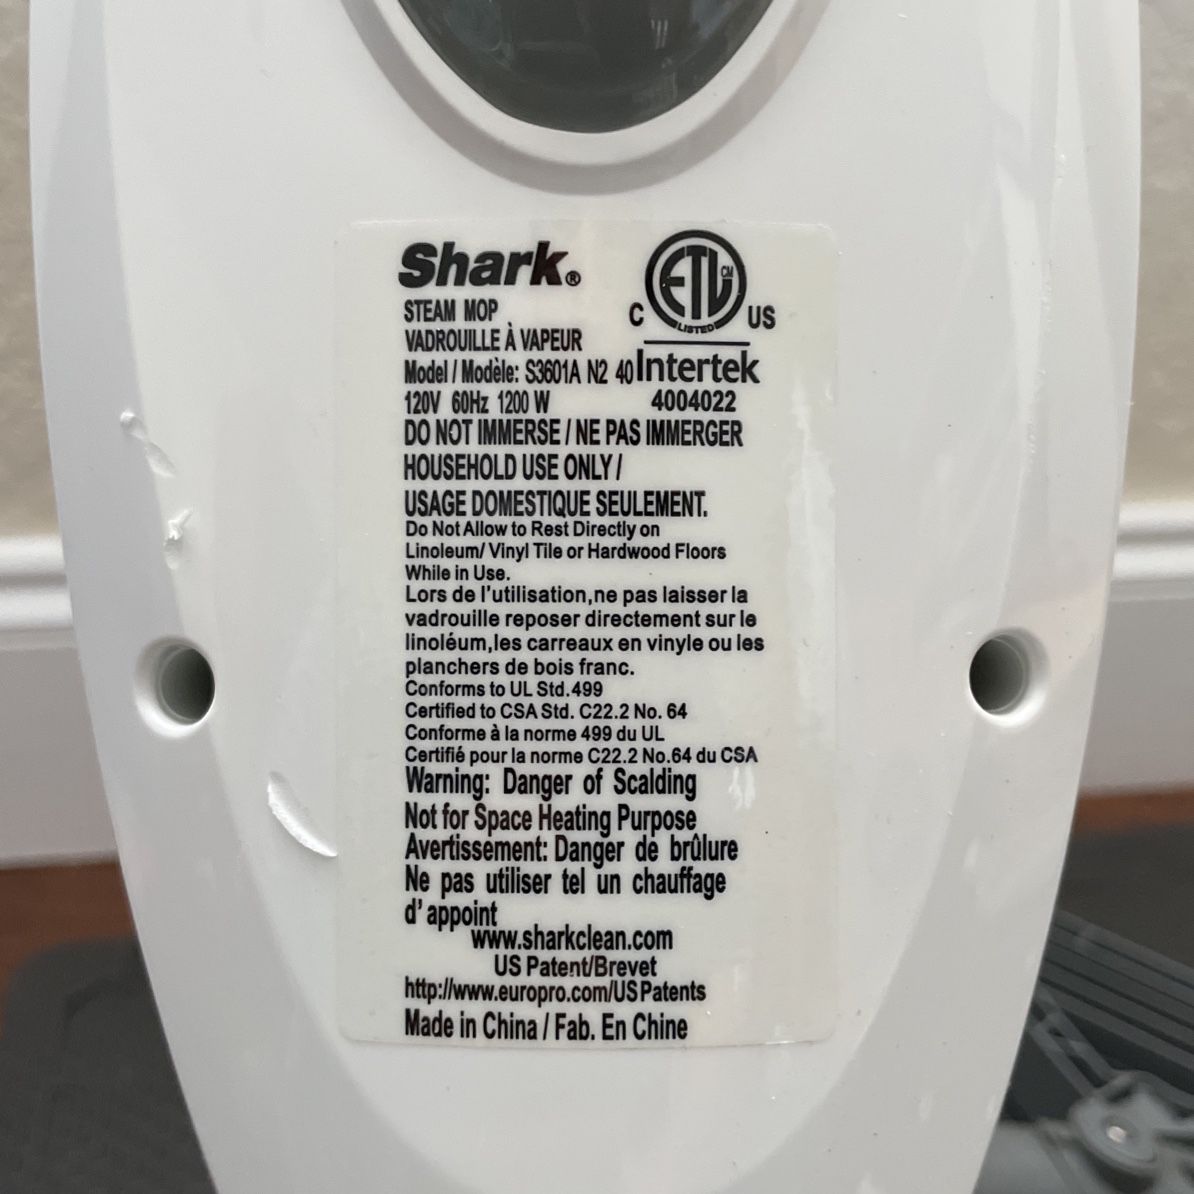 Shark Professional Steam Pocket S3601 Professional Steam Mop